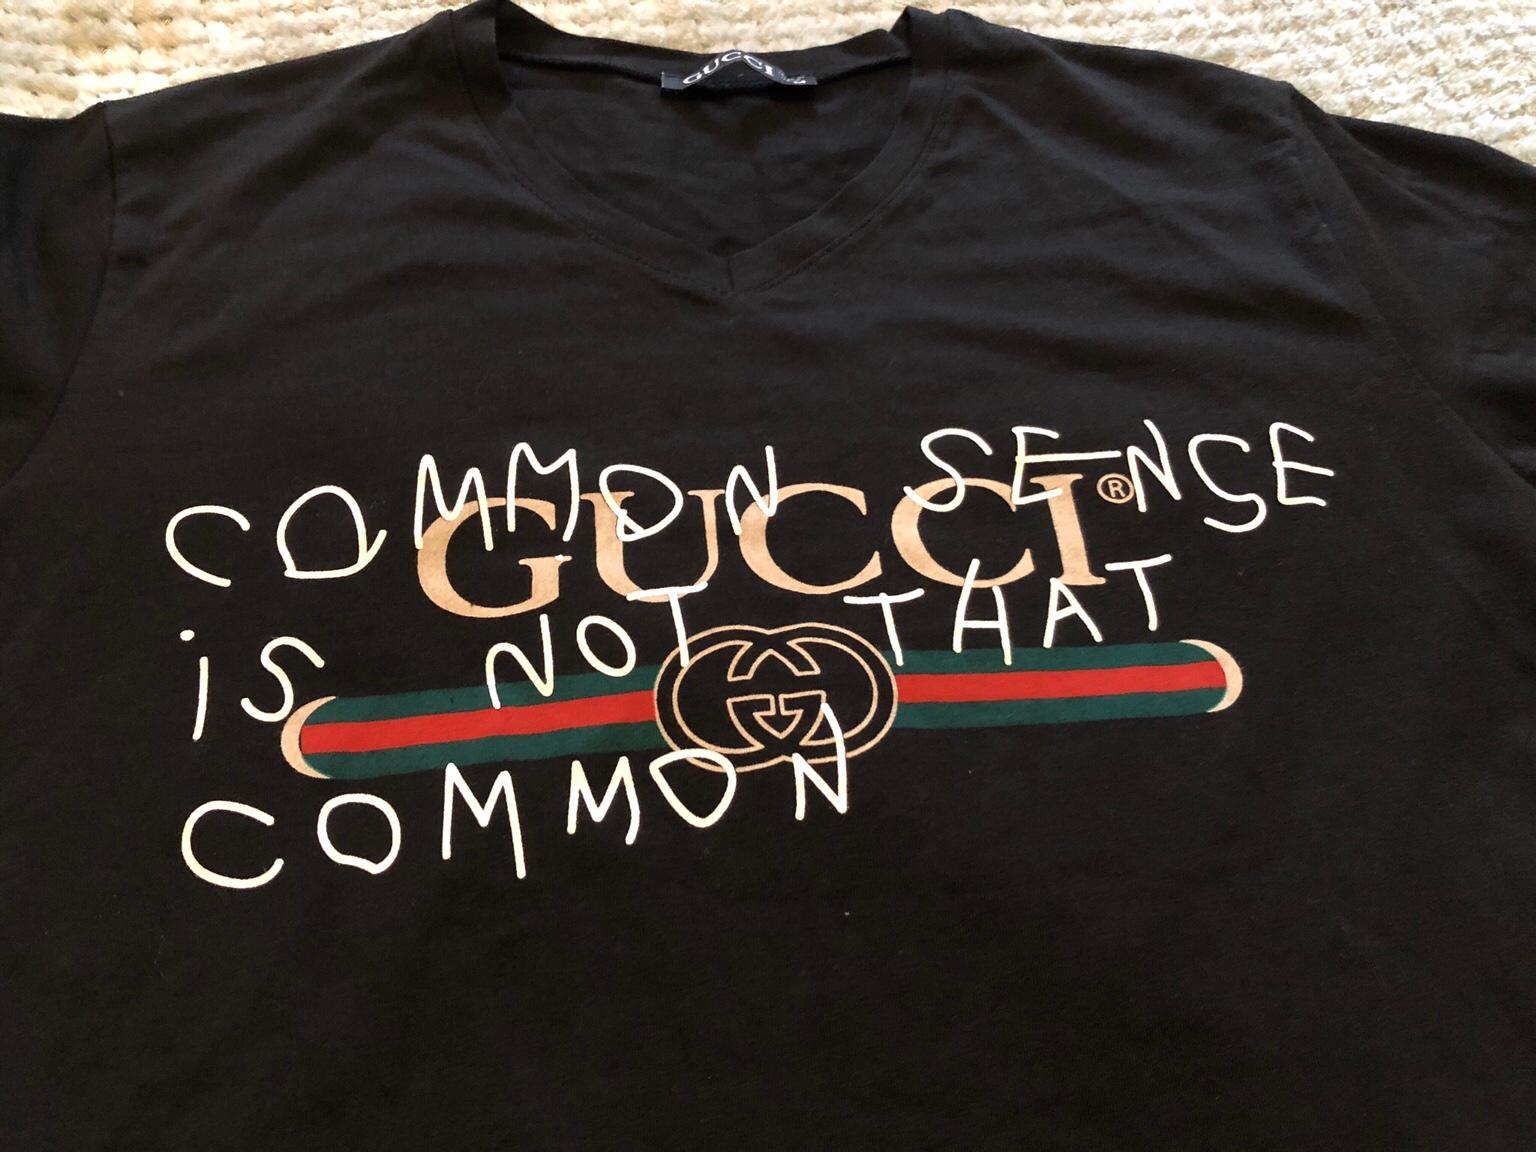 gucci sweatshirt common sense is not that common